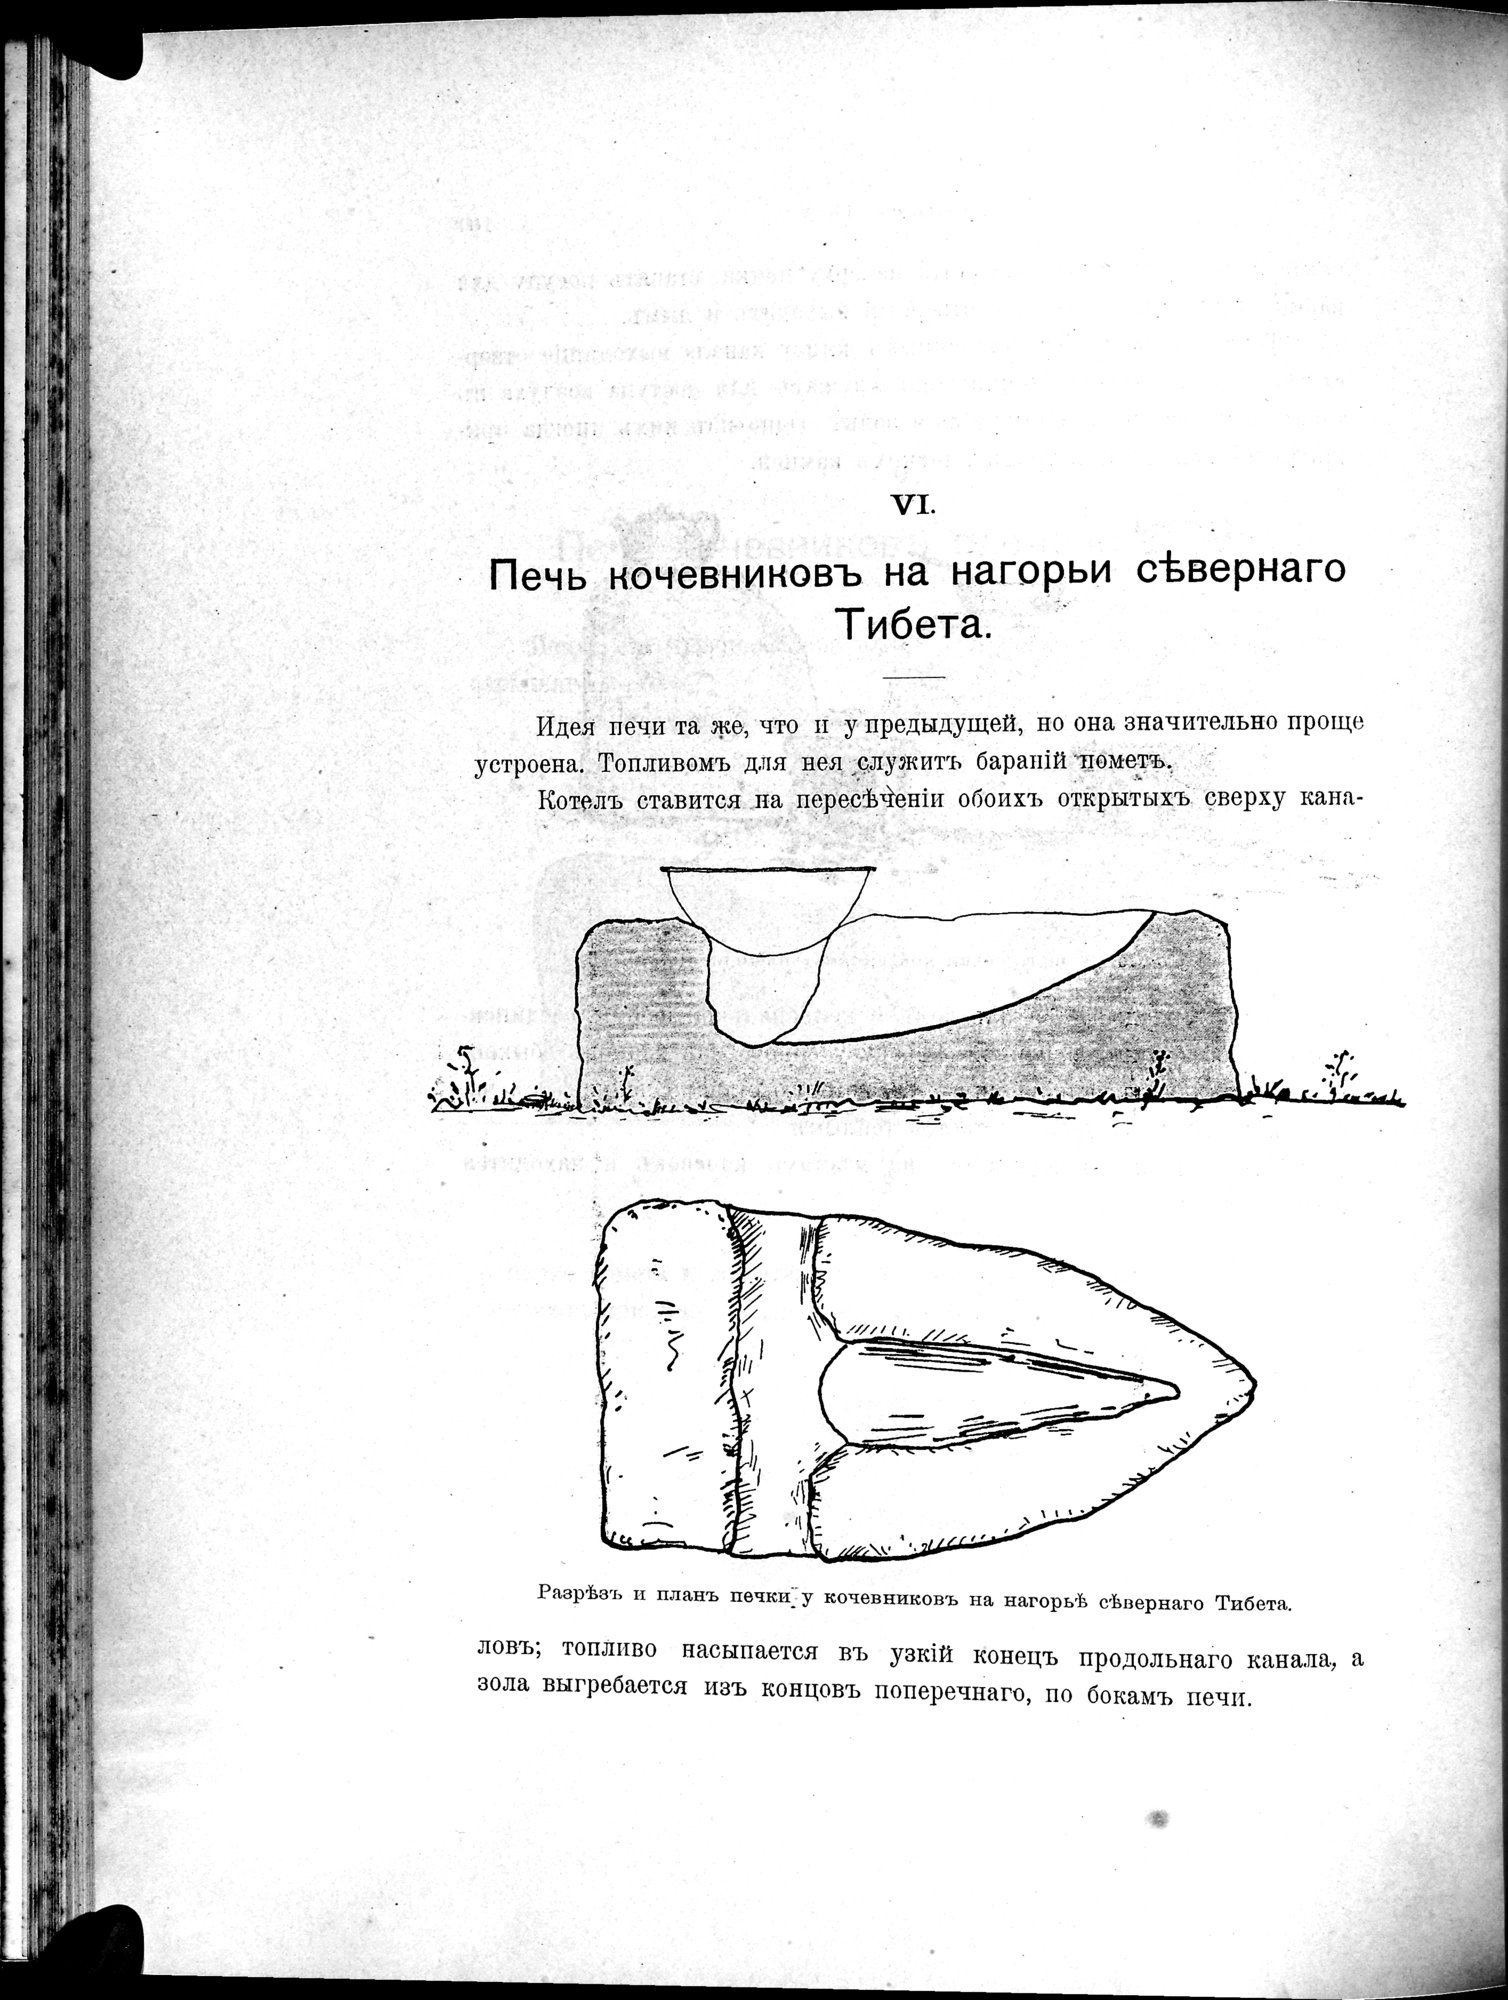 Mongoliia i Kam : vol.3 / Page 132 (Grayscale High Resolution Image)